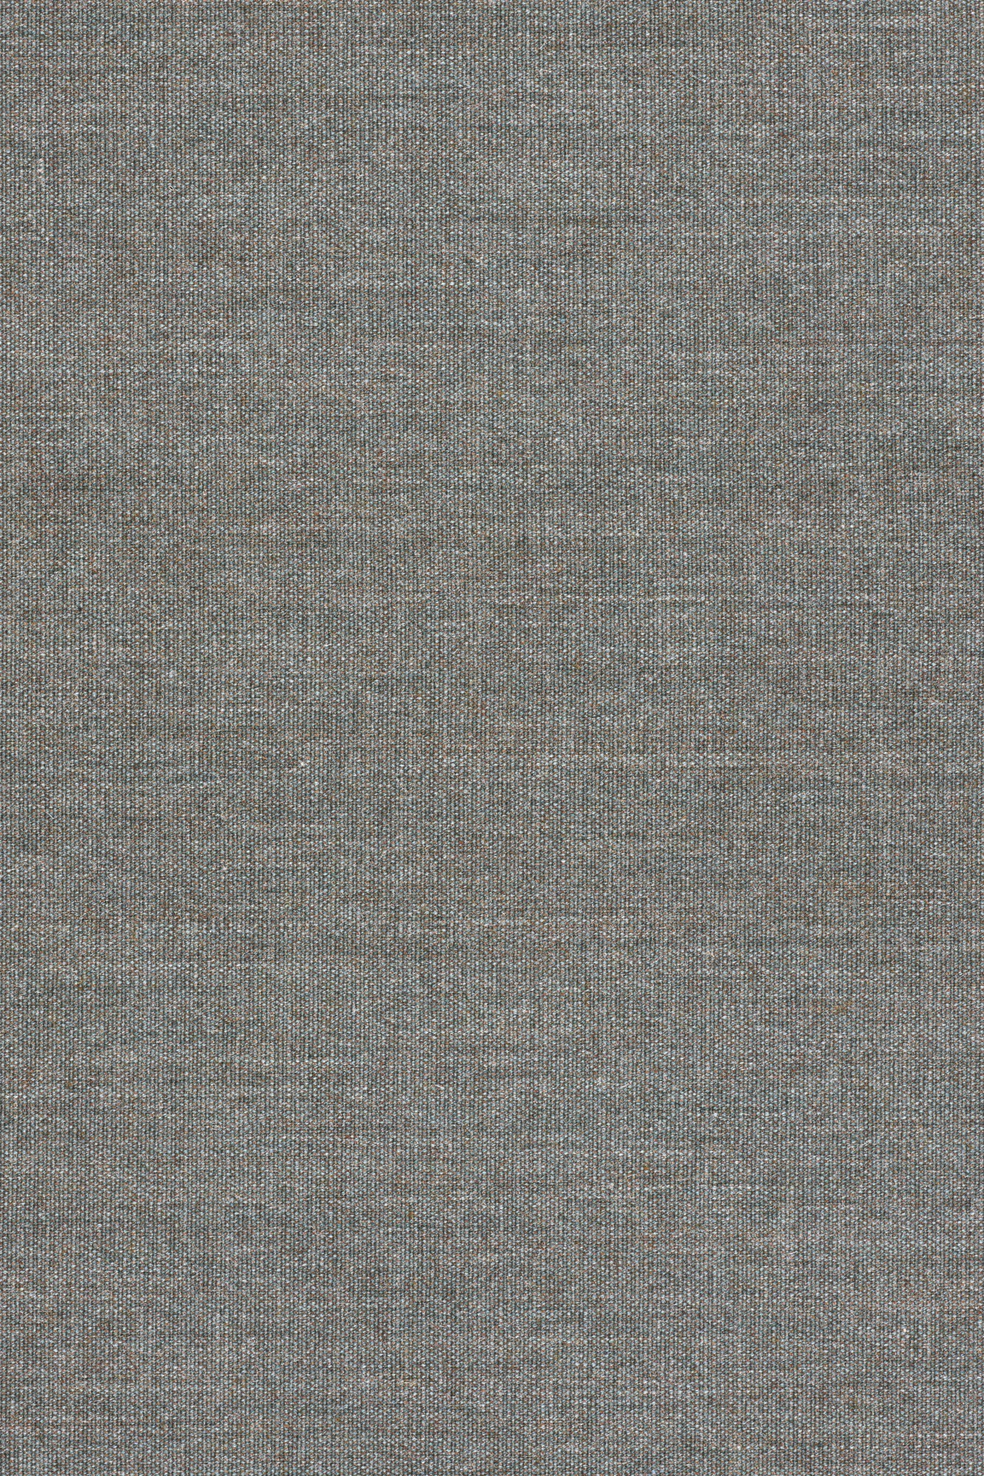 Fabric sample Canvas 2 936 grey